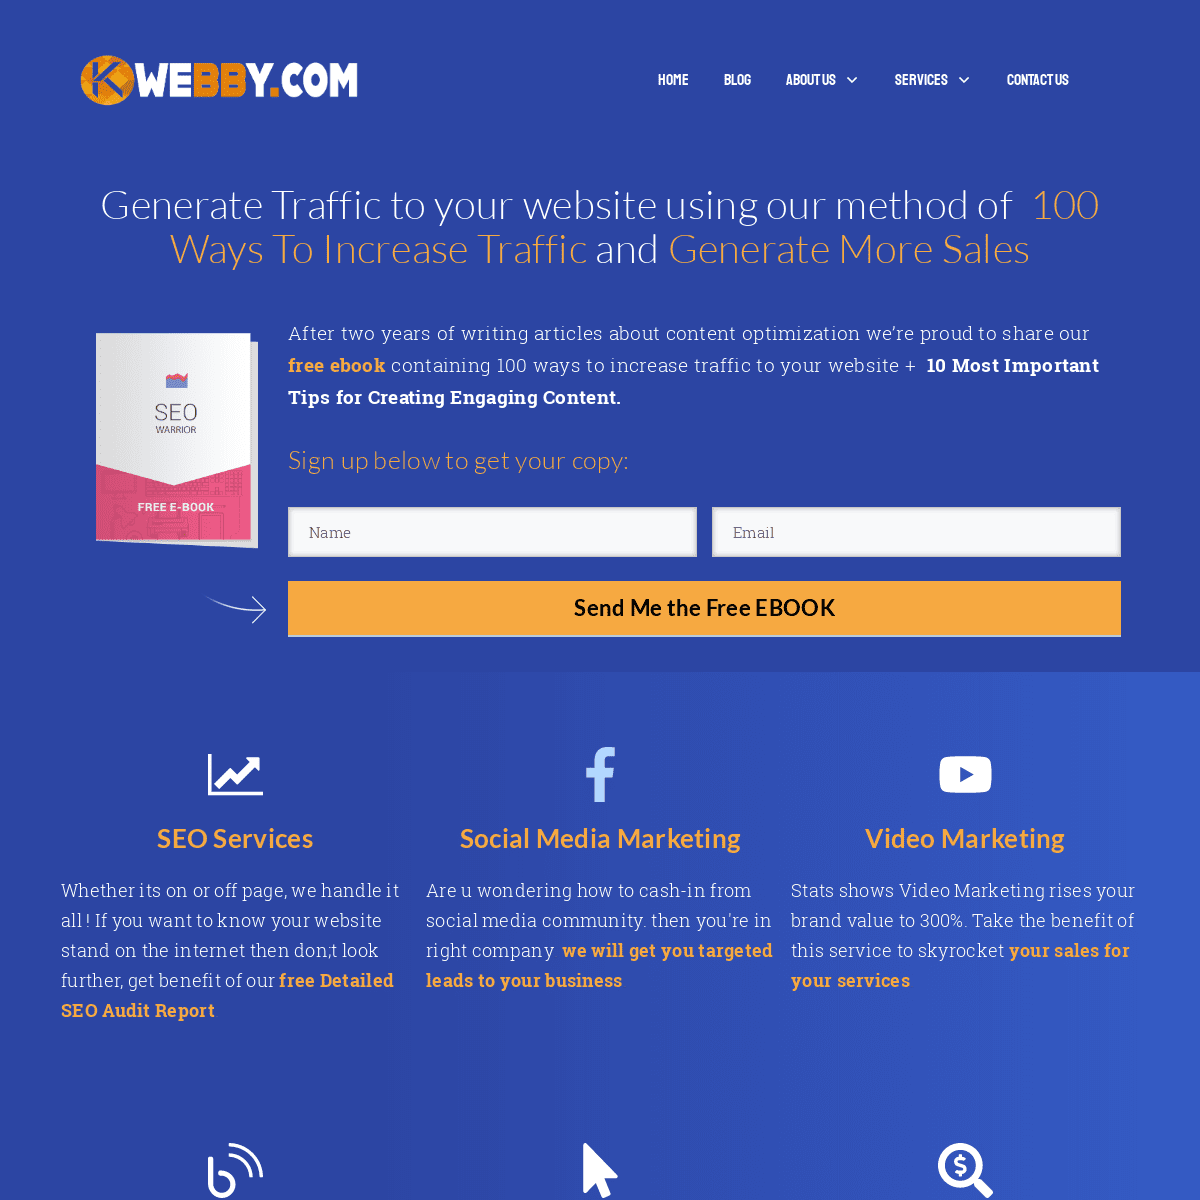 A complete backup of kwebby.com